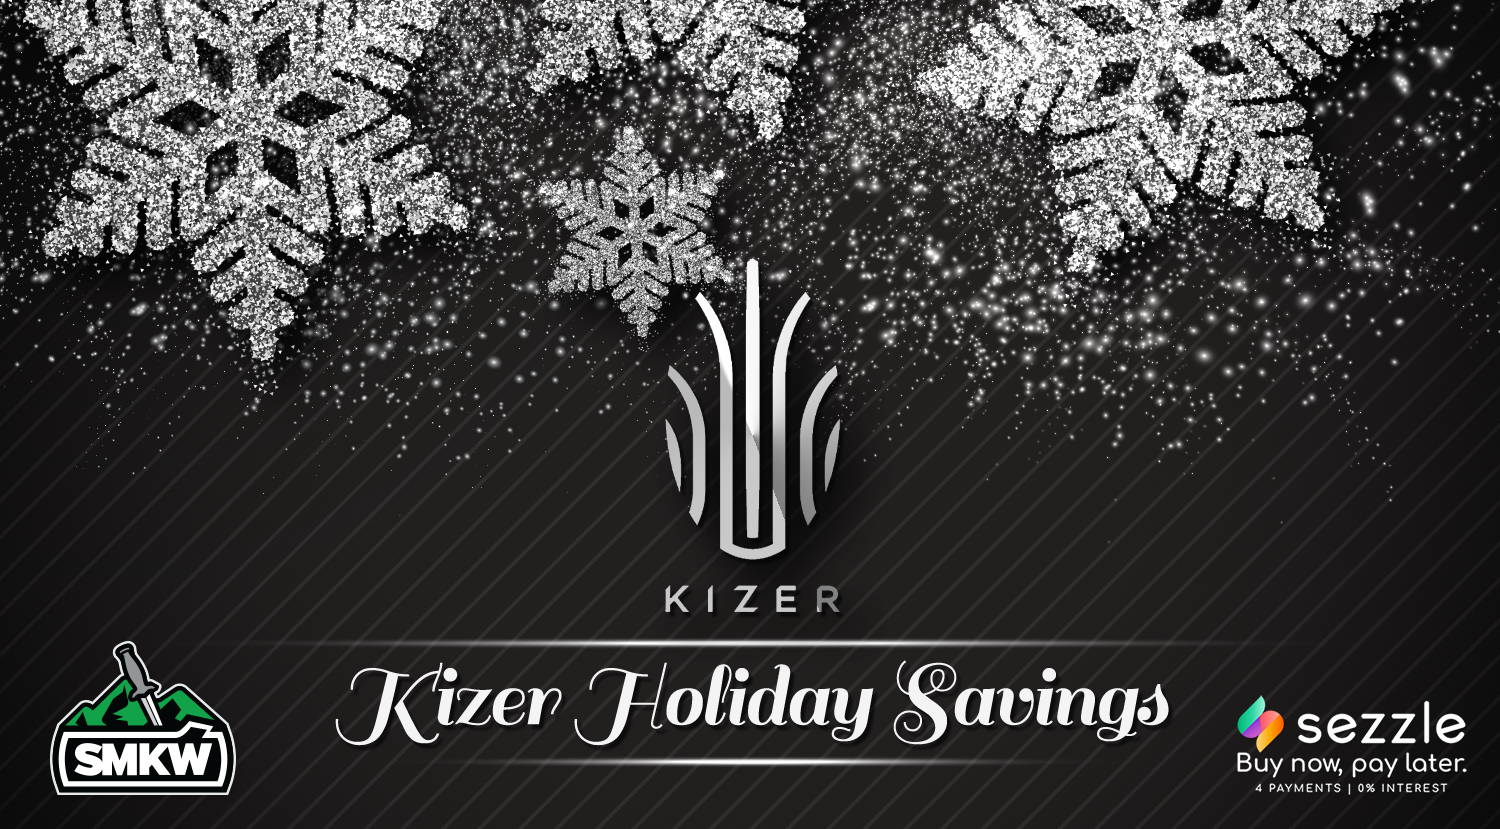 Holiday Sale - Save on Select Kizer Knives!